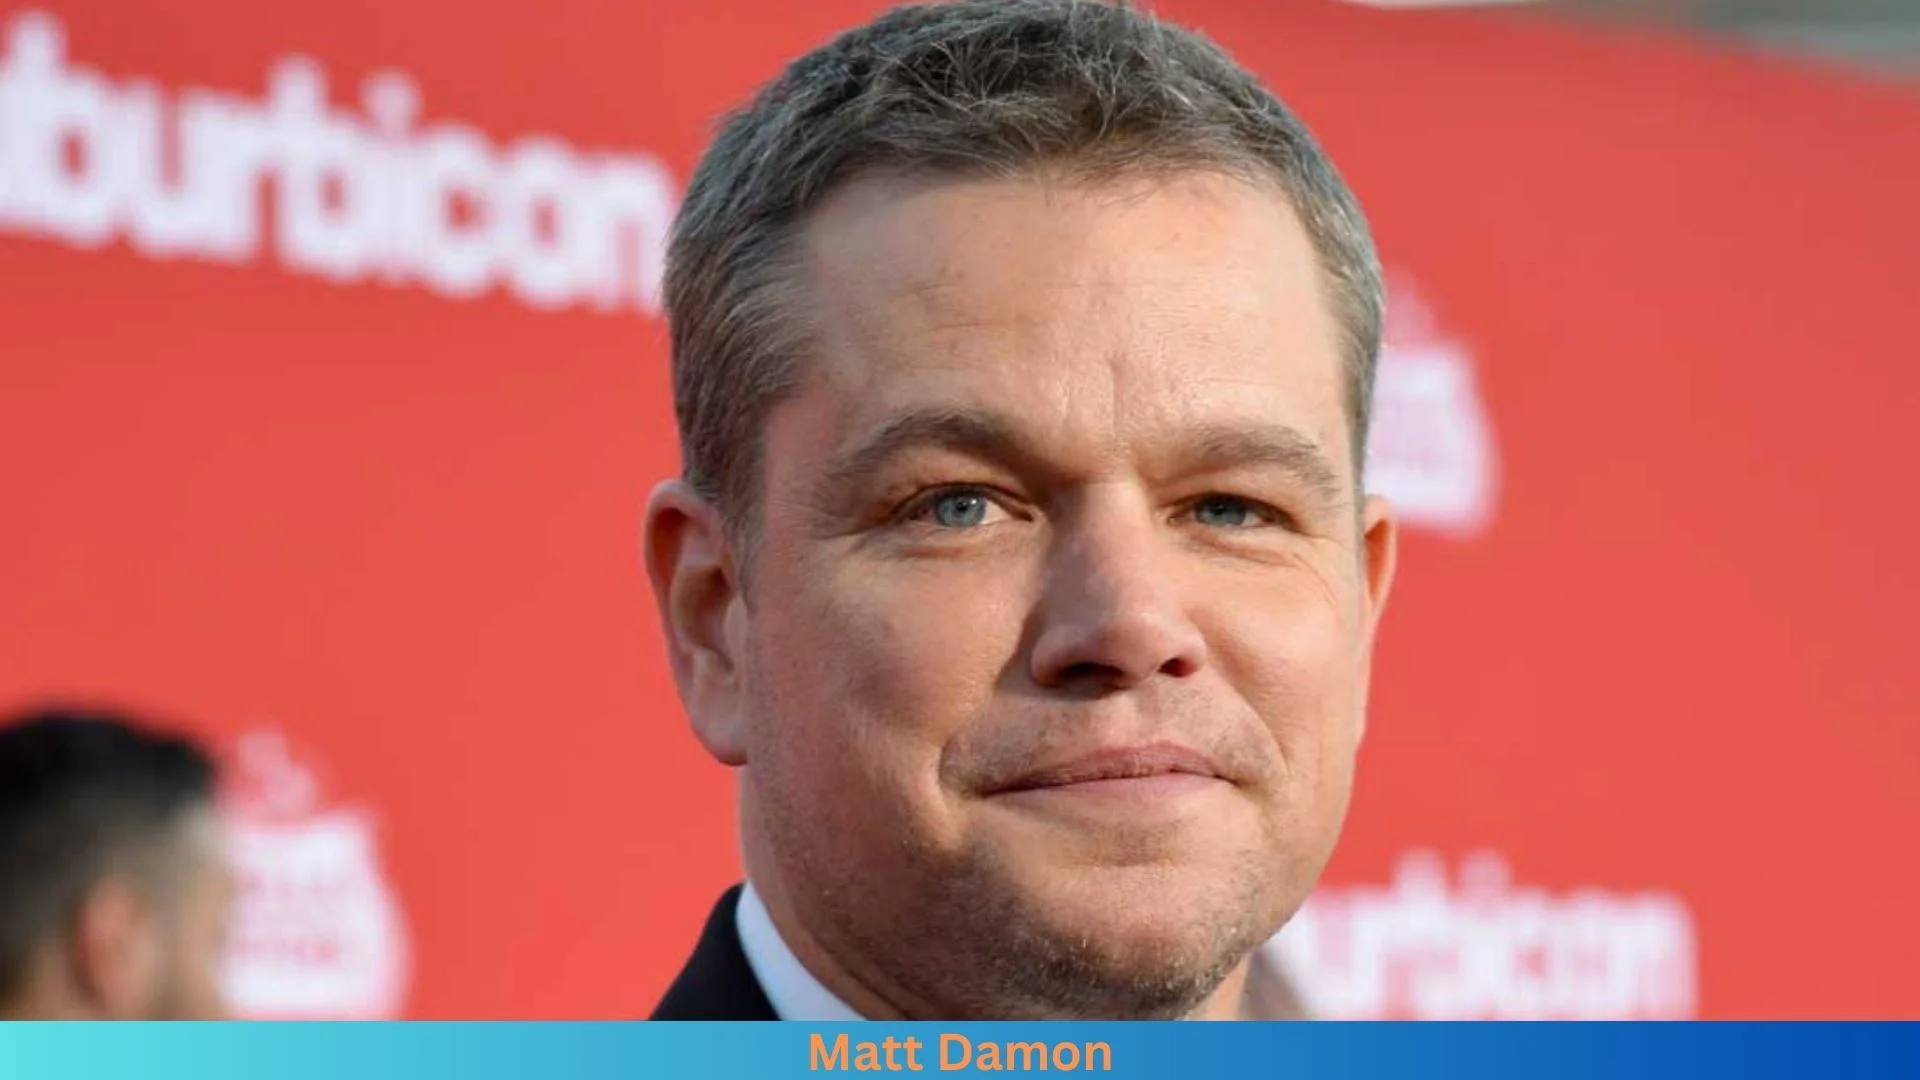 Net Worth of Matt Damon